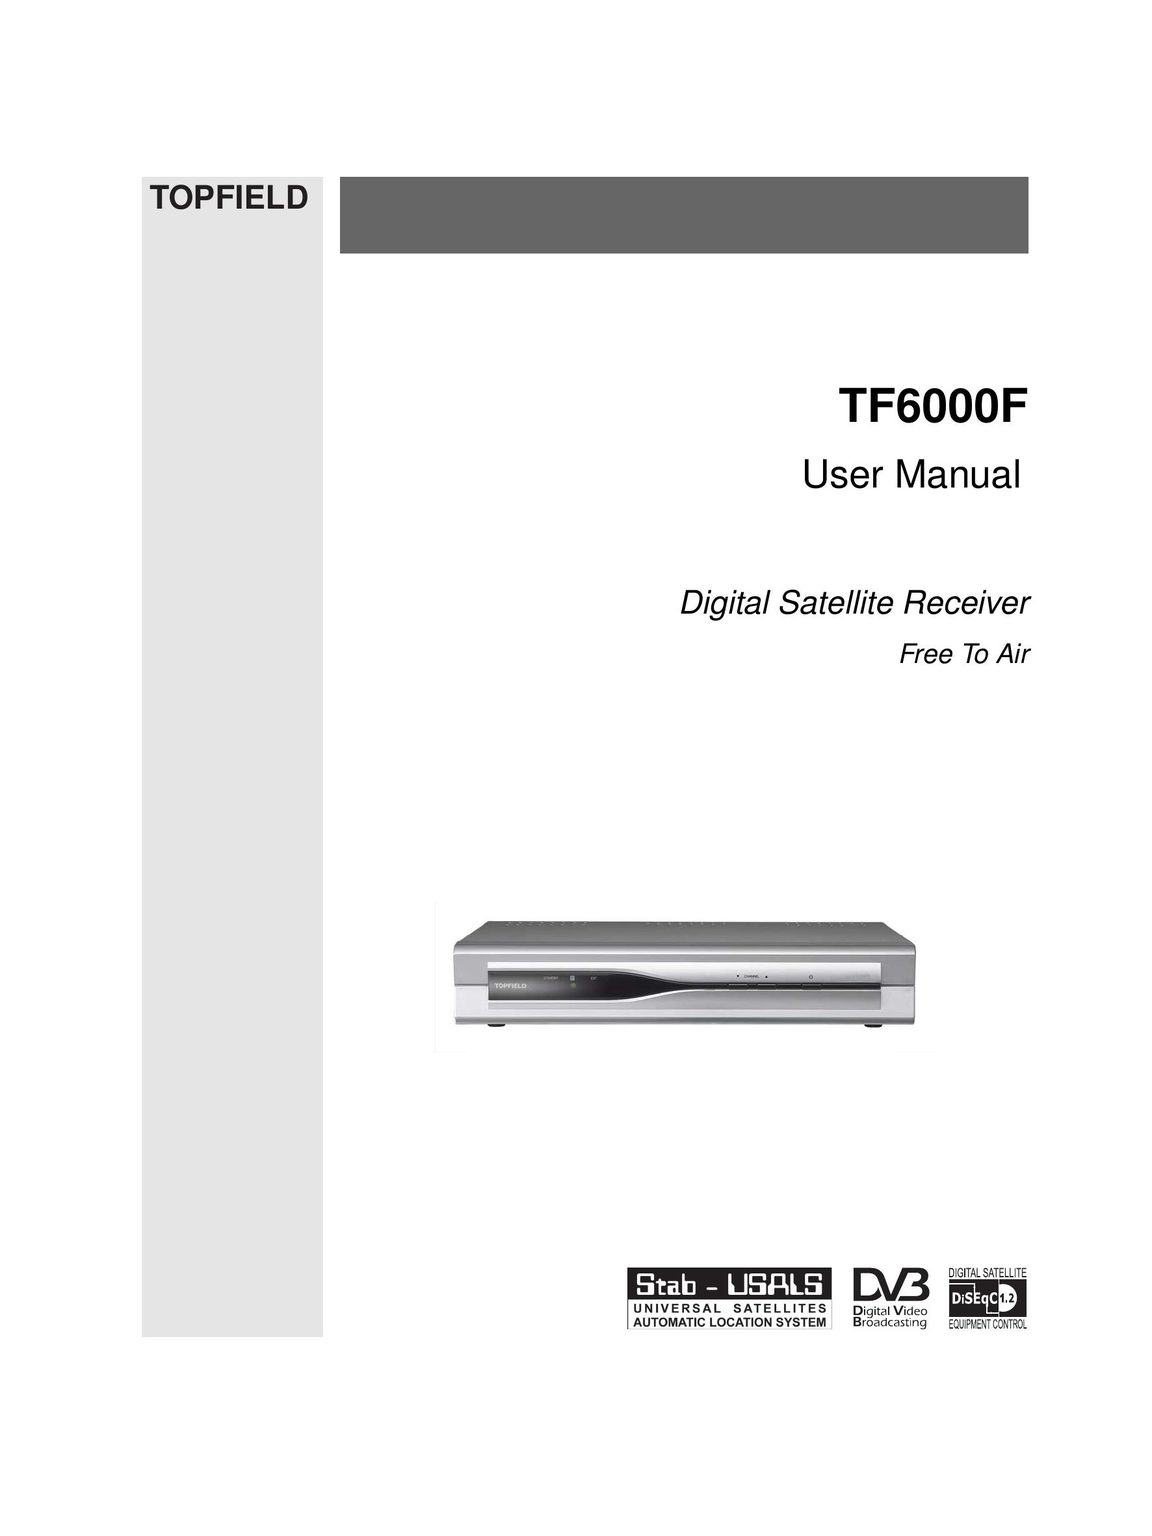 Topfield TF6000F Satellite TV System User Manual